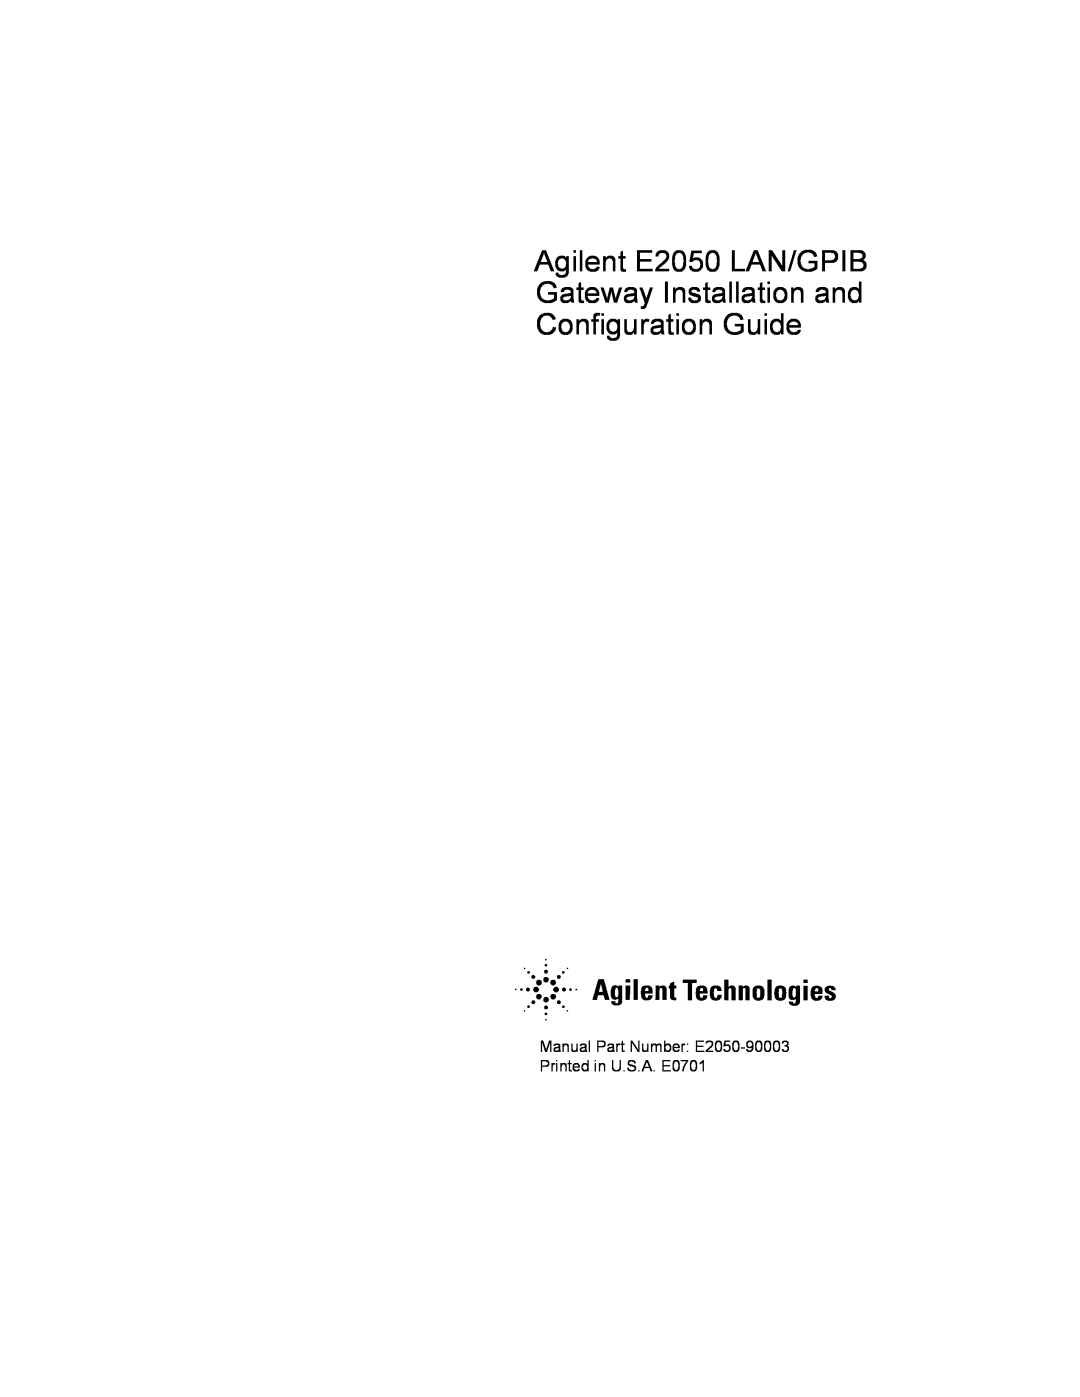 Agilent Technologies E2050-90003 manual Agilent E2050 LAN/GPIB Gateway Installation and Configuration Guide 